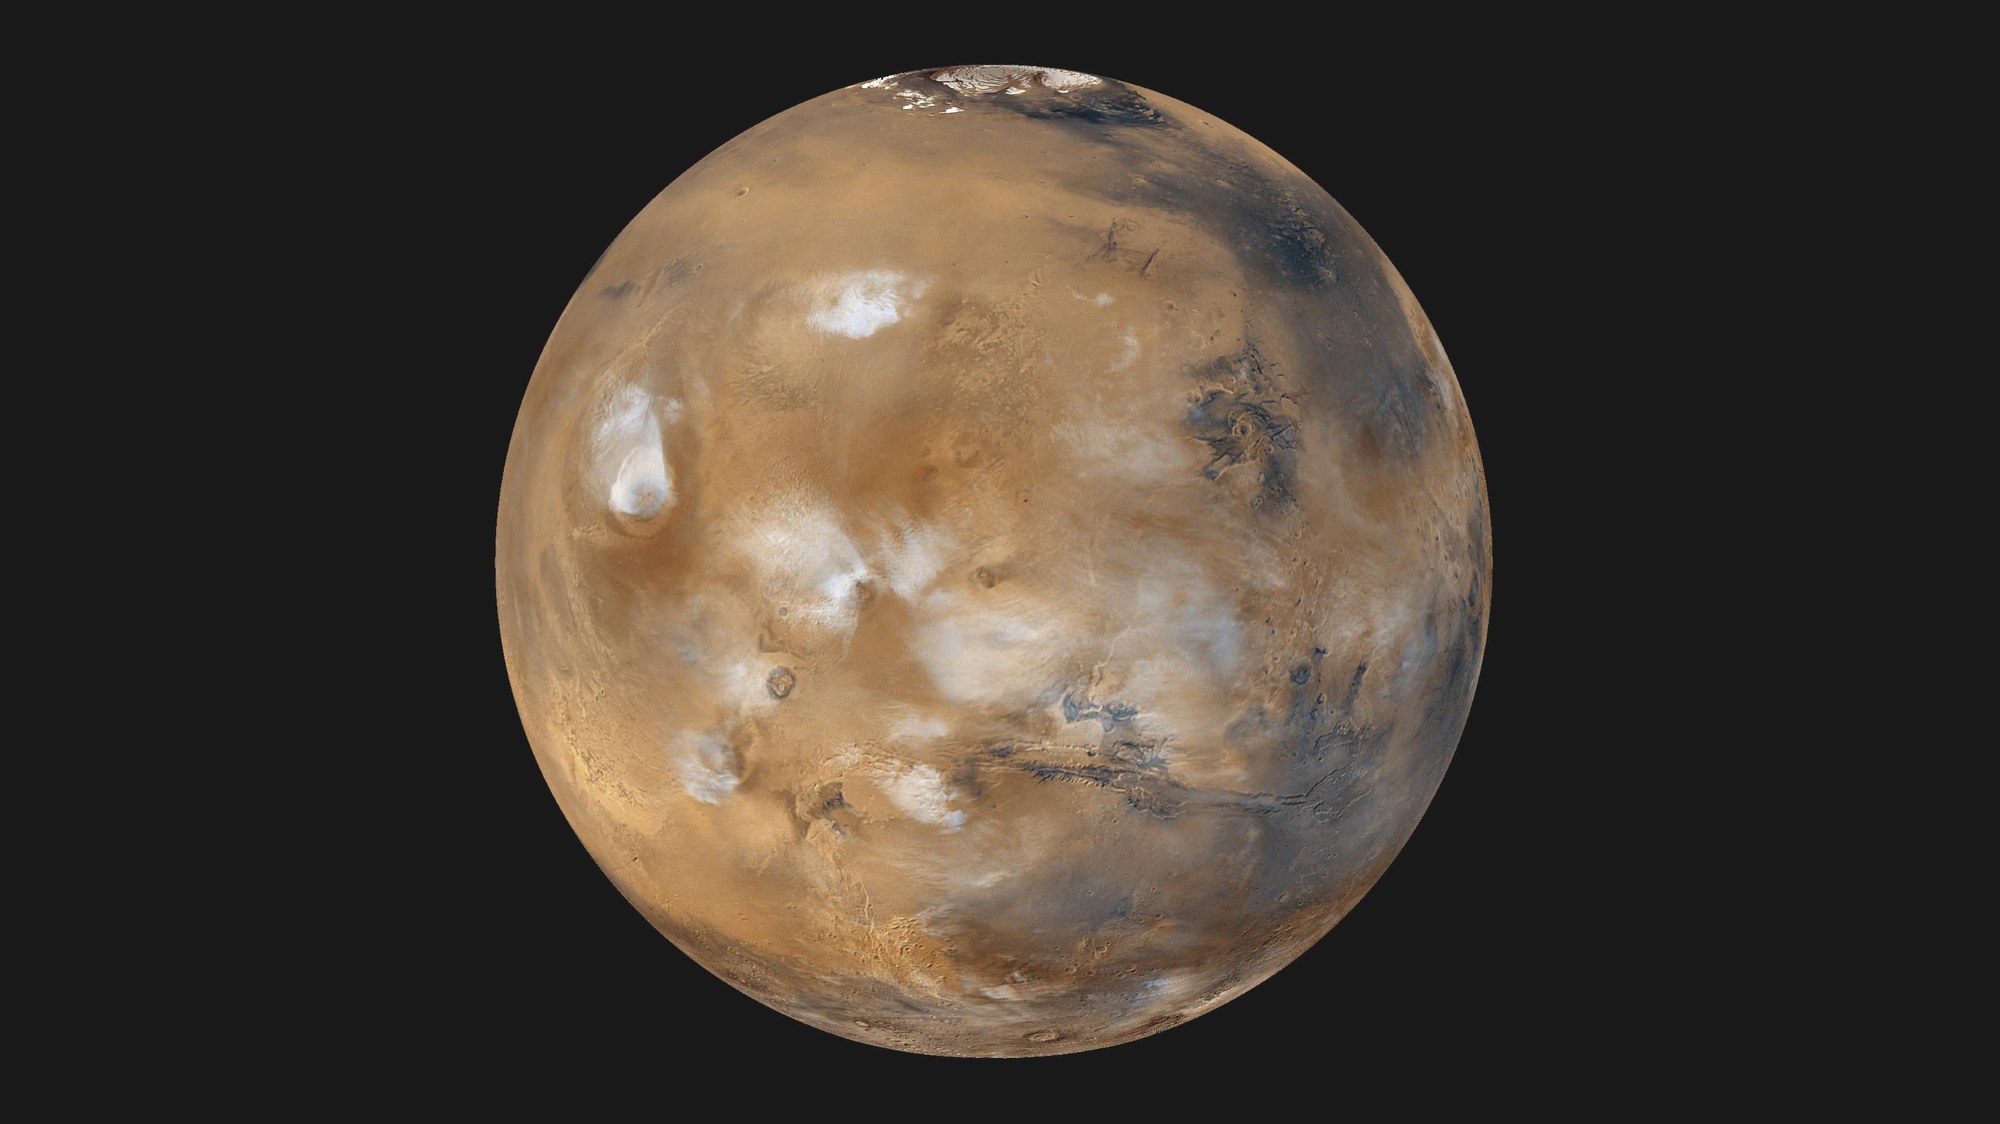 Planet Mars